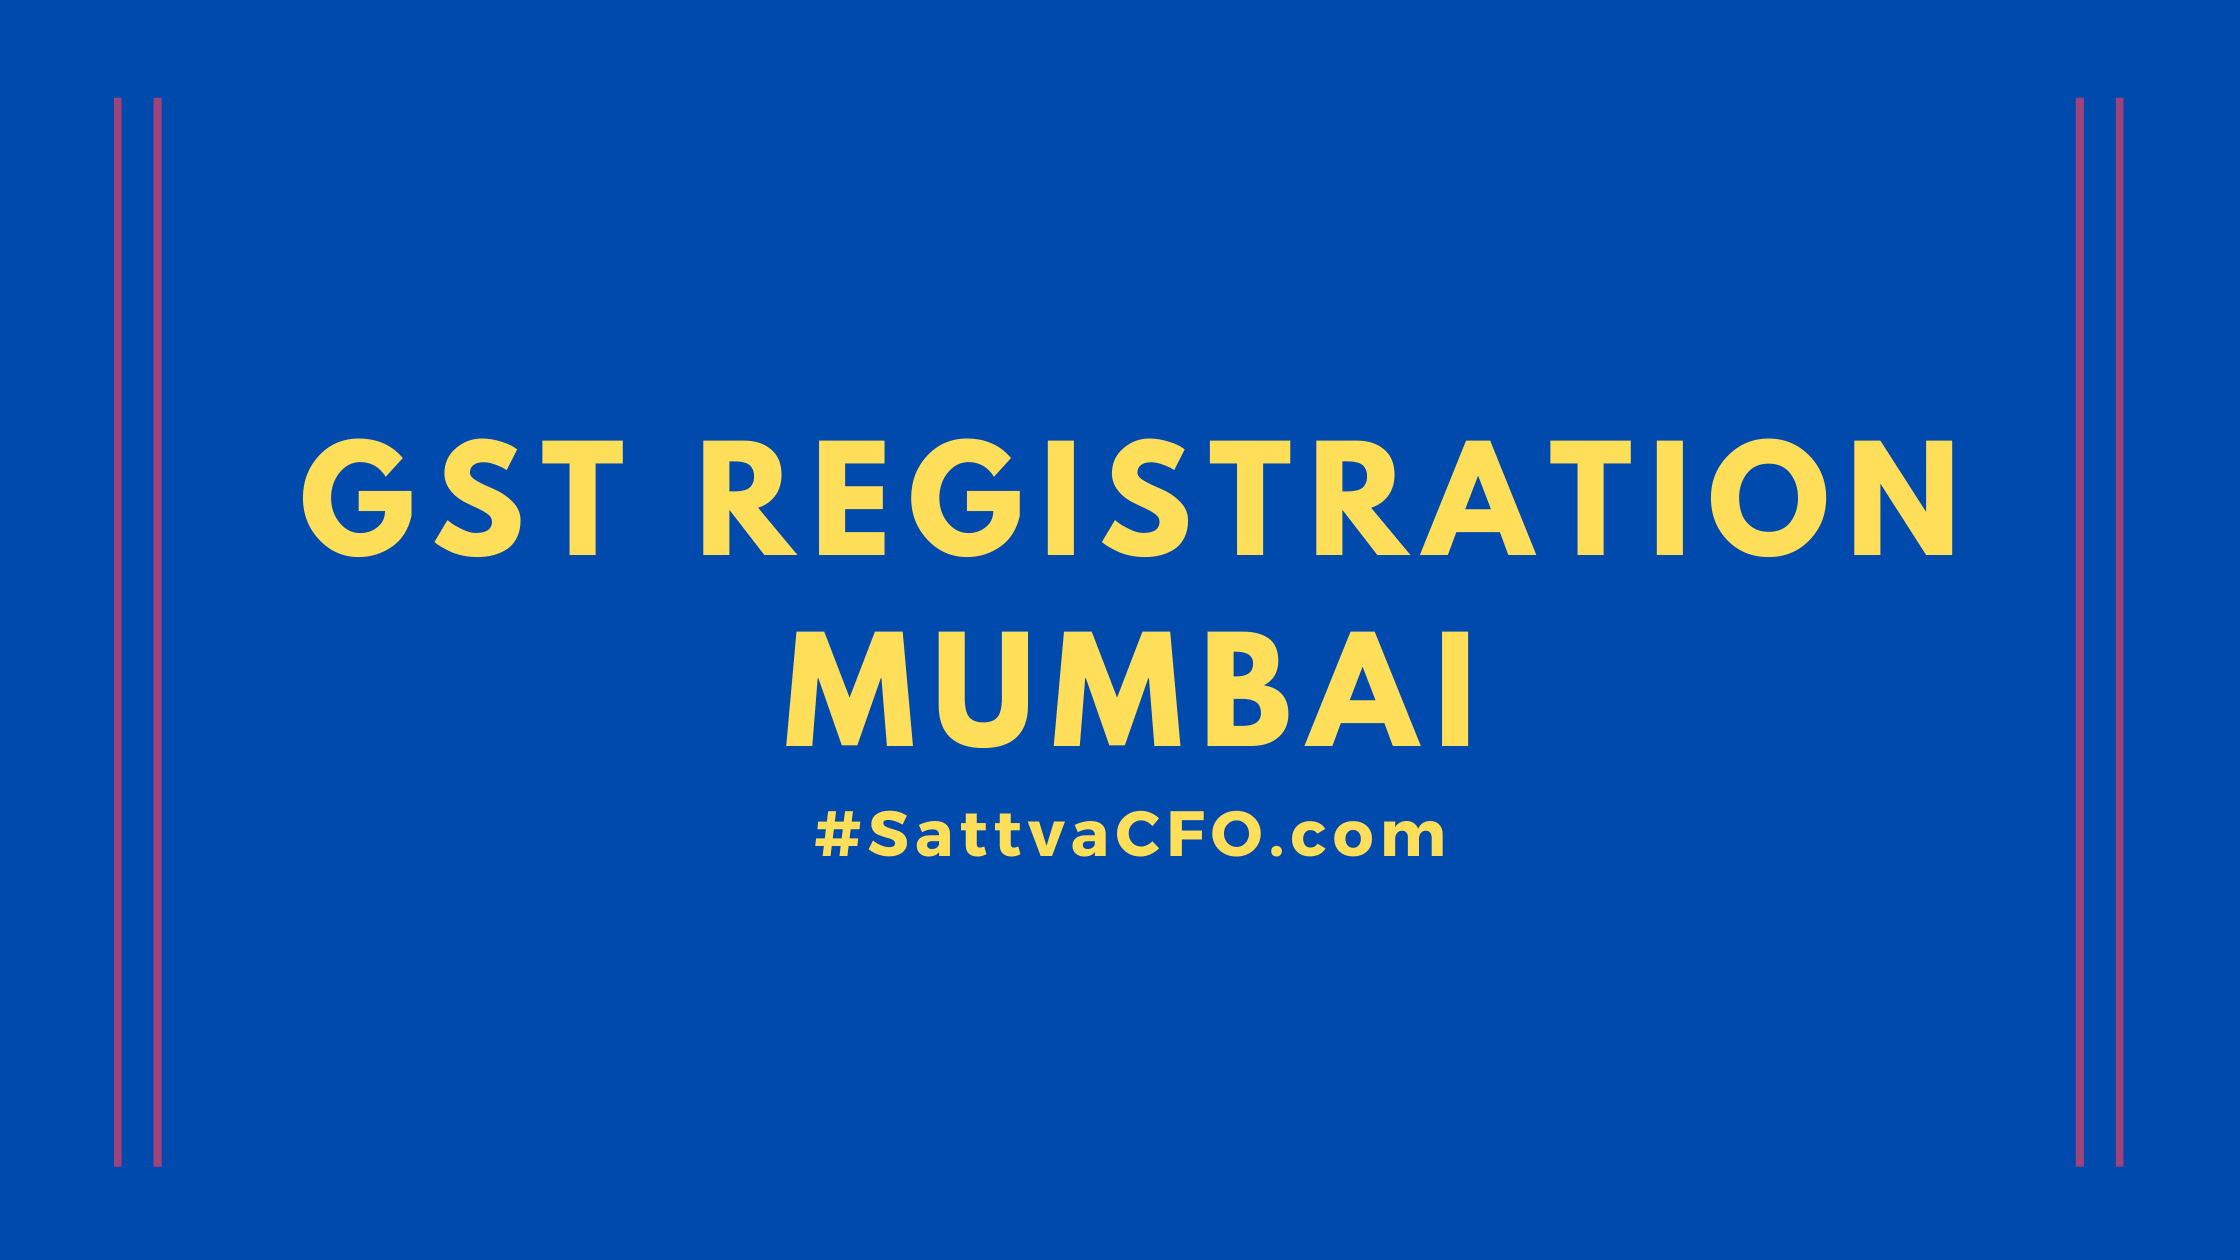 GST Registration in Mumbai | SattvaCFO